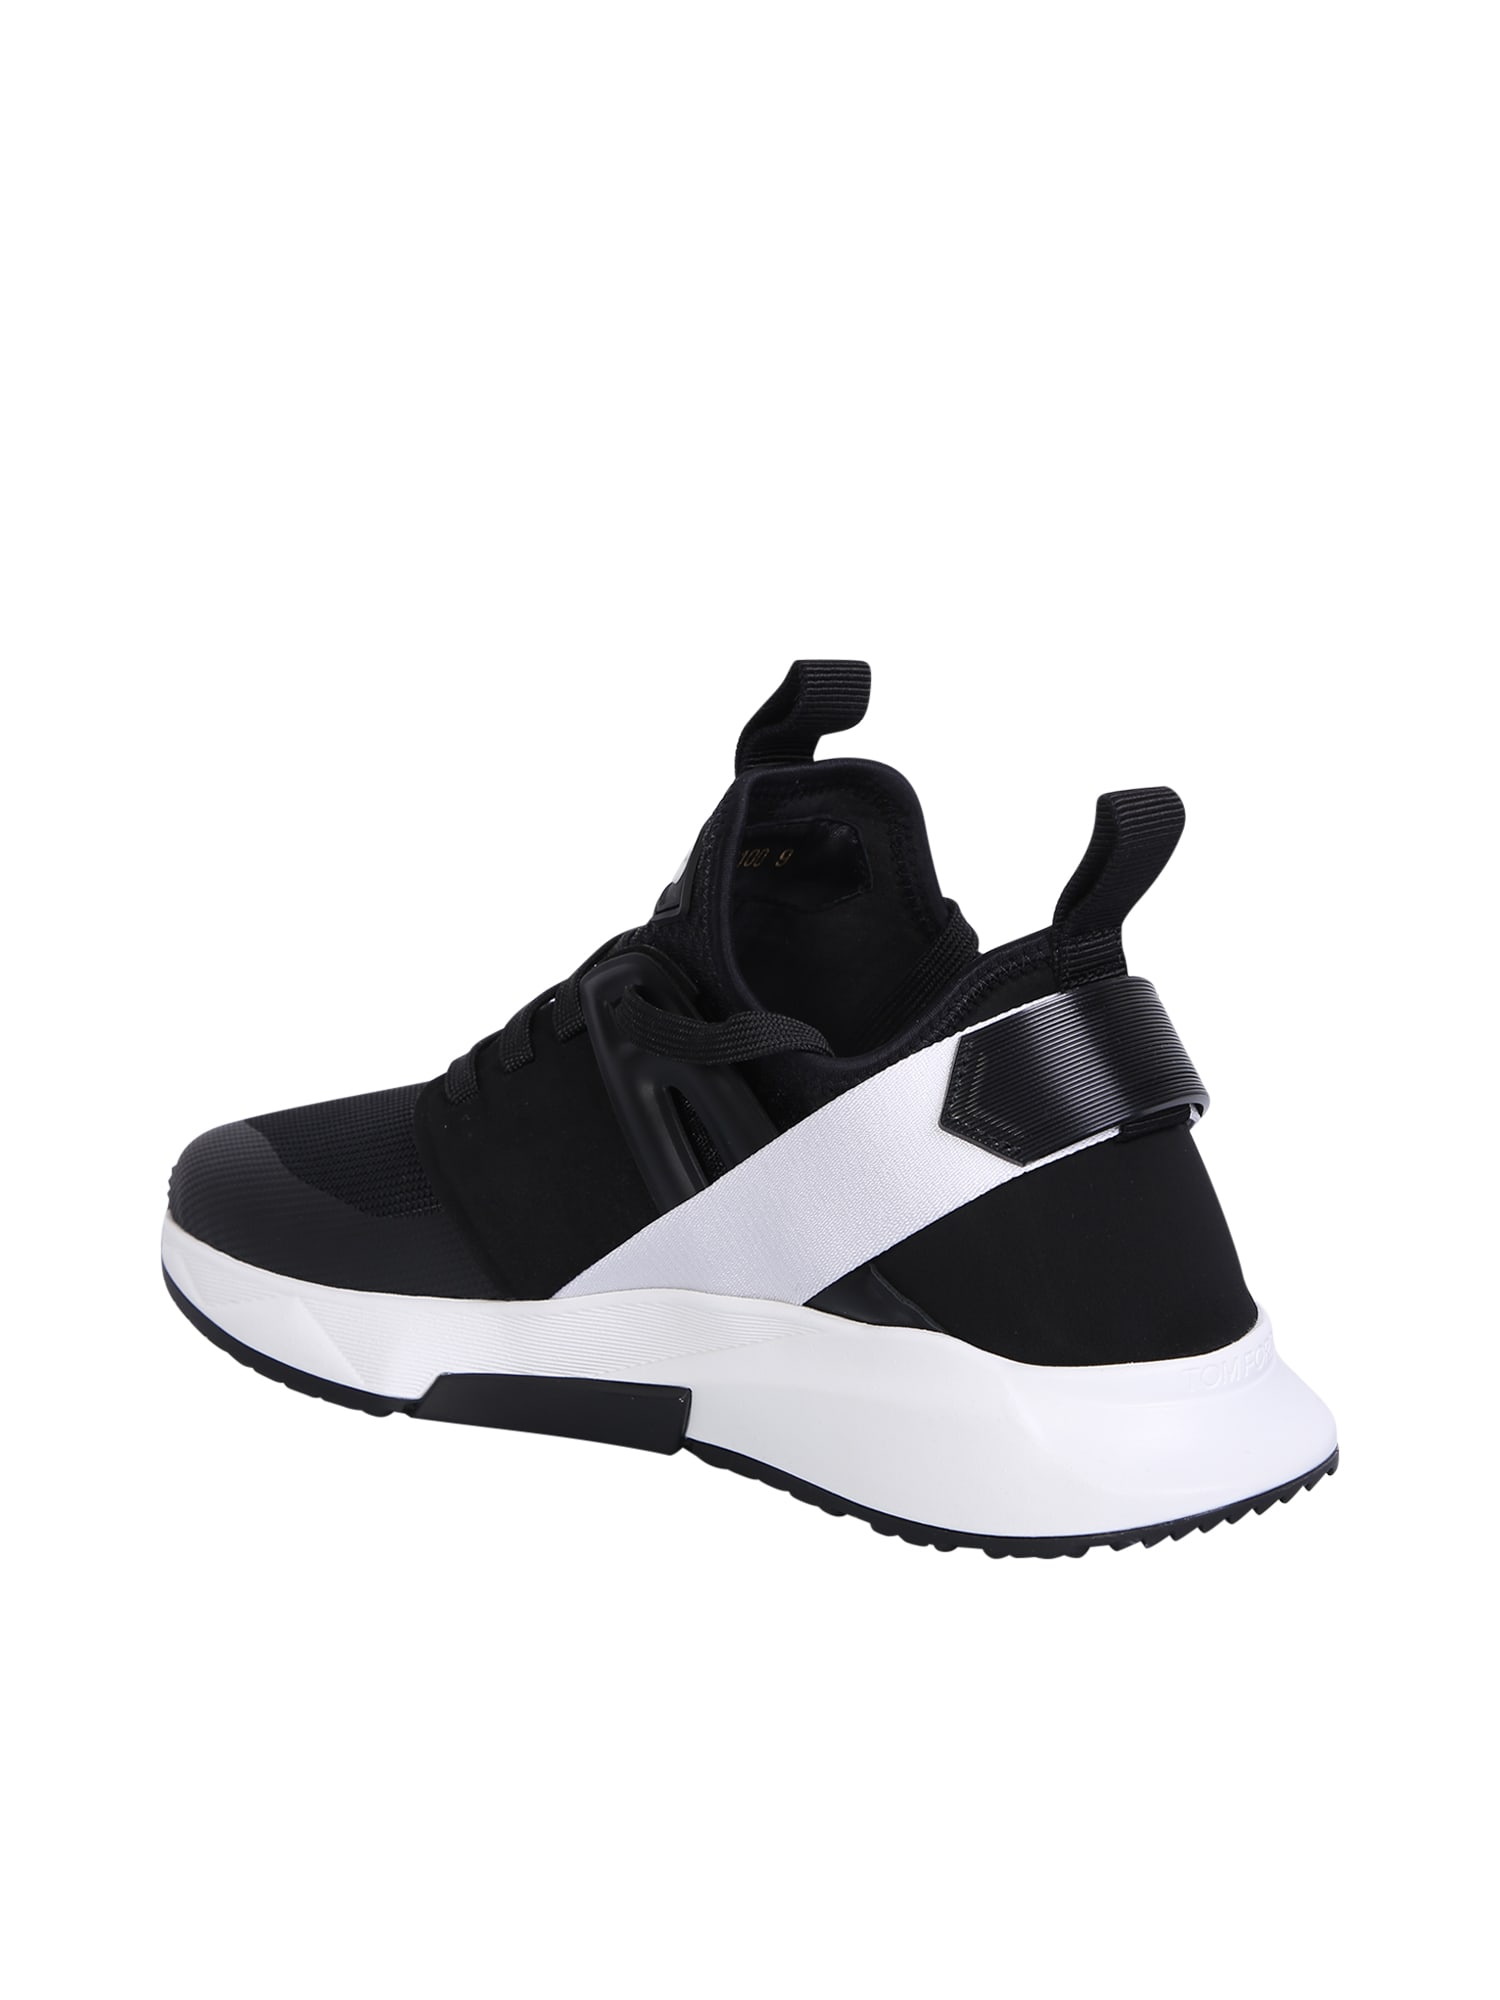 Shop Tom Ford Black Jago Sneakers